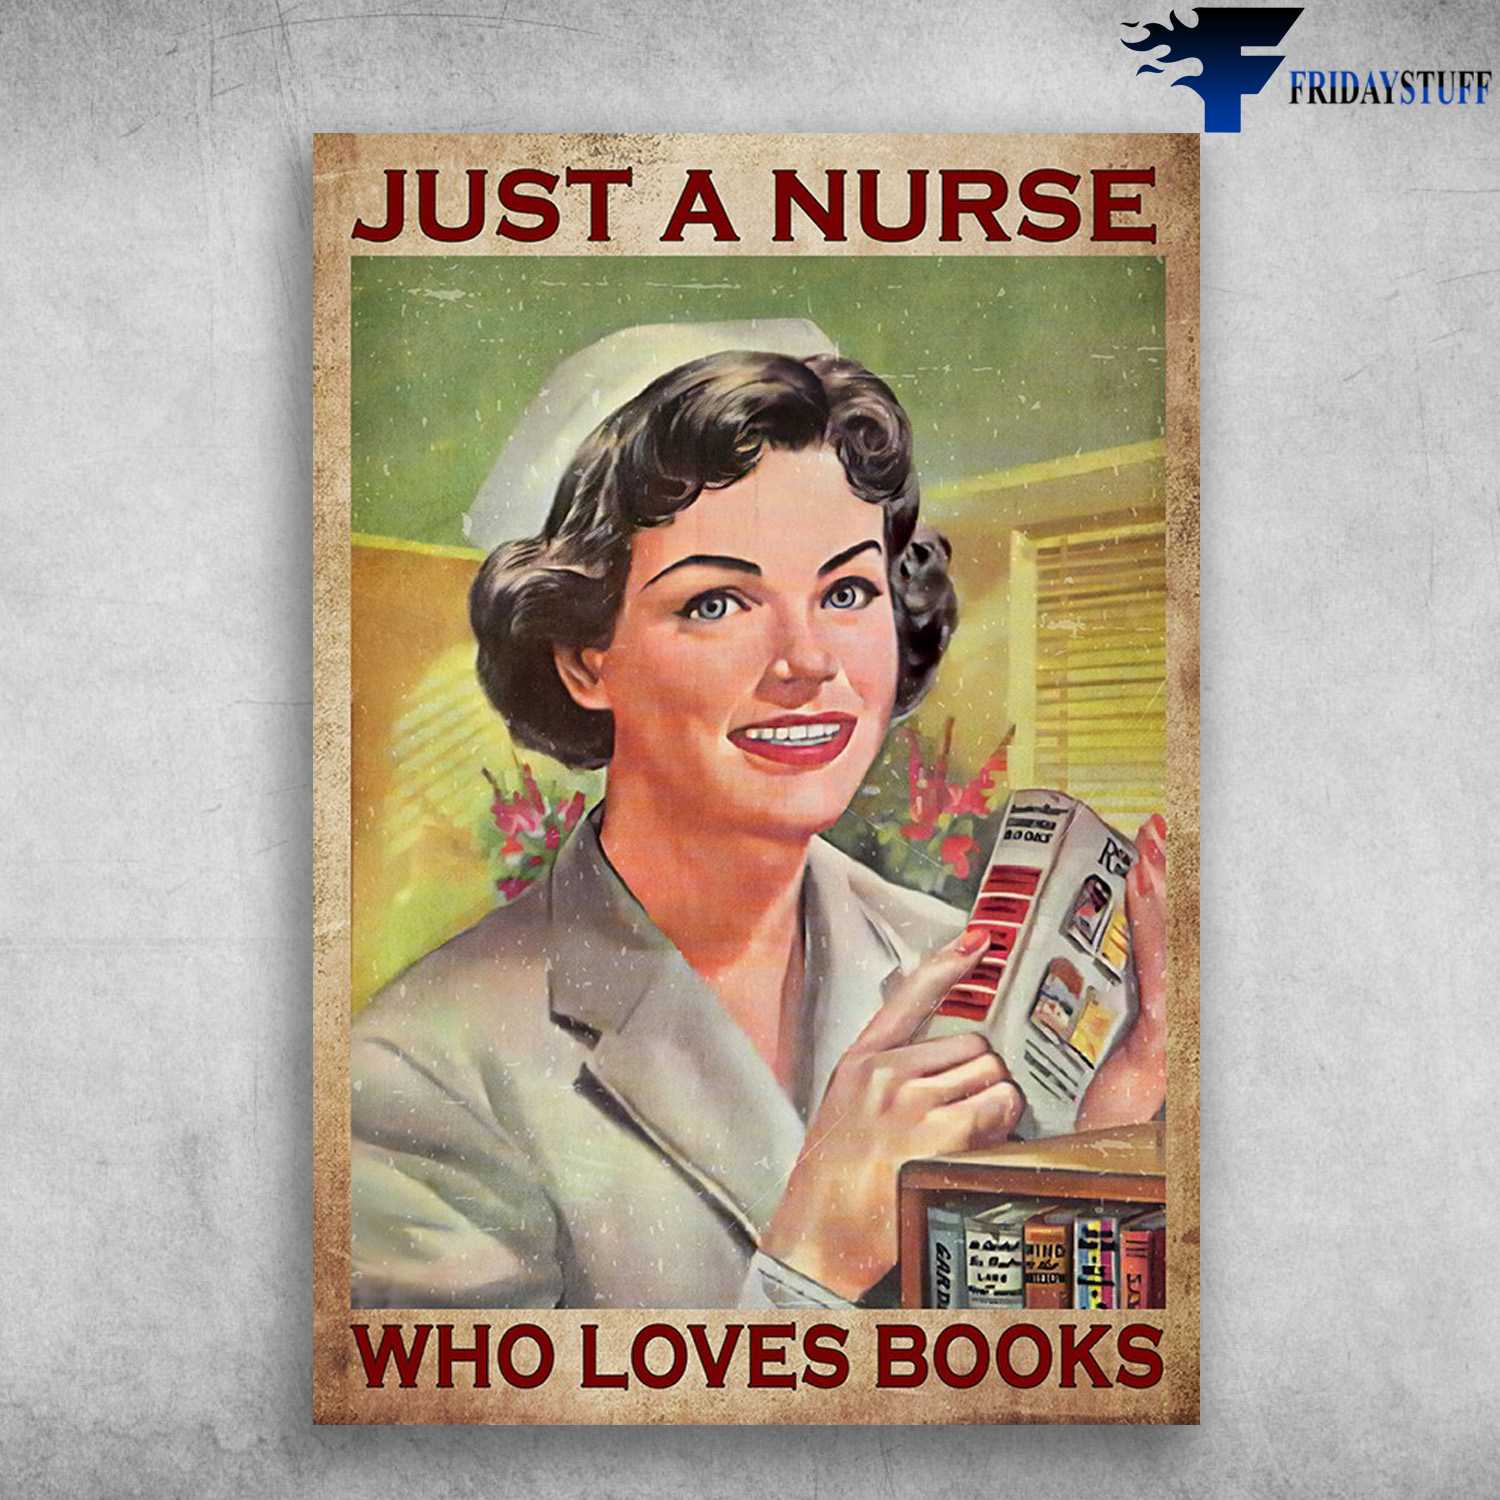 Nurse Loves Book - Just A Nurse, Who Loves Books